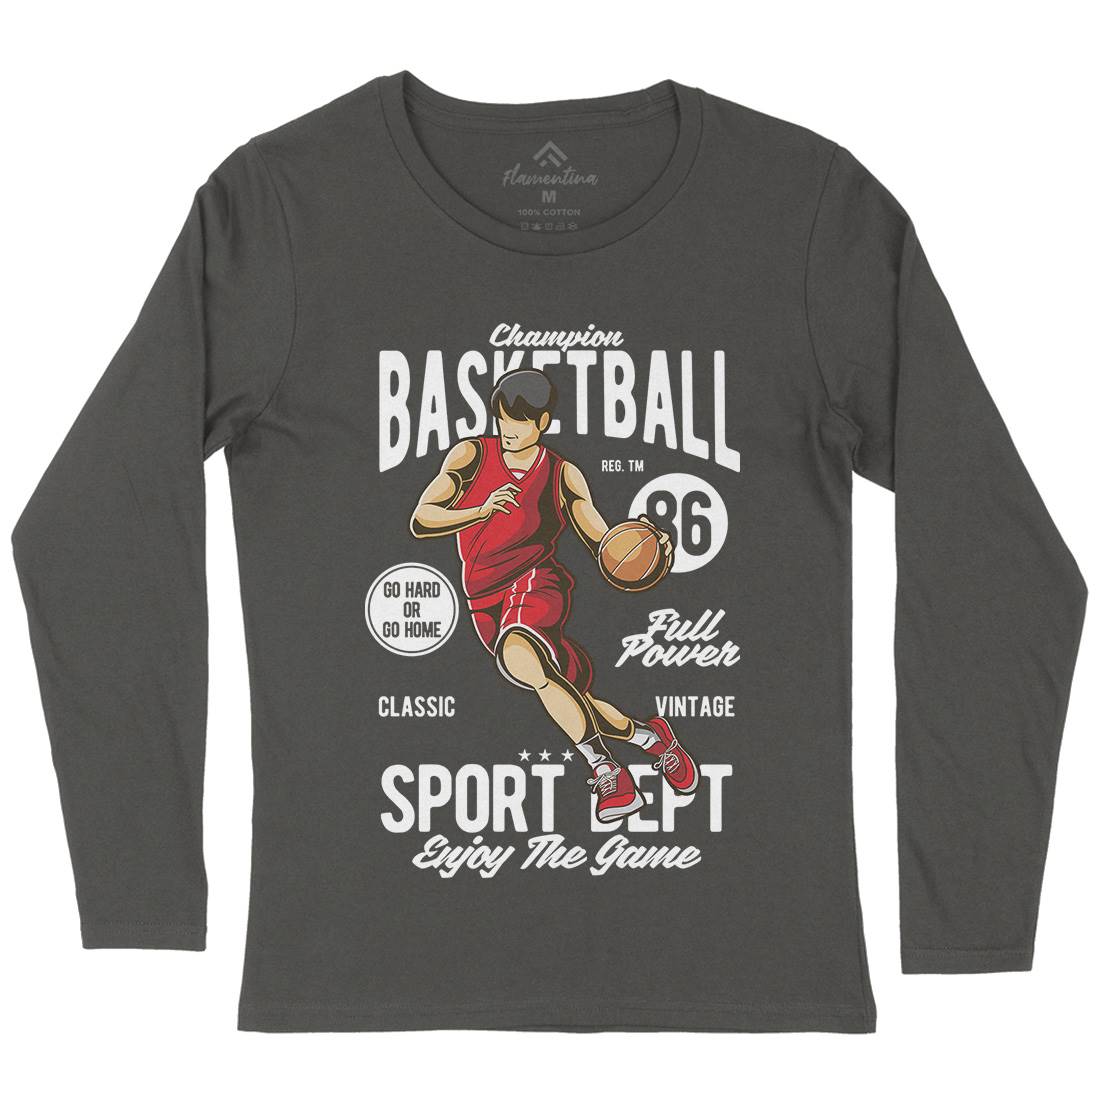 Champion Basketball Womens Long Sleeve T-Shirt Sport C327